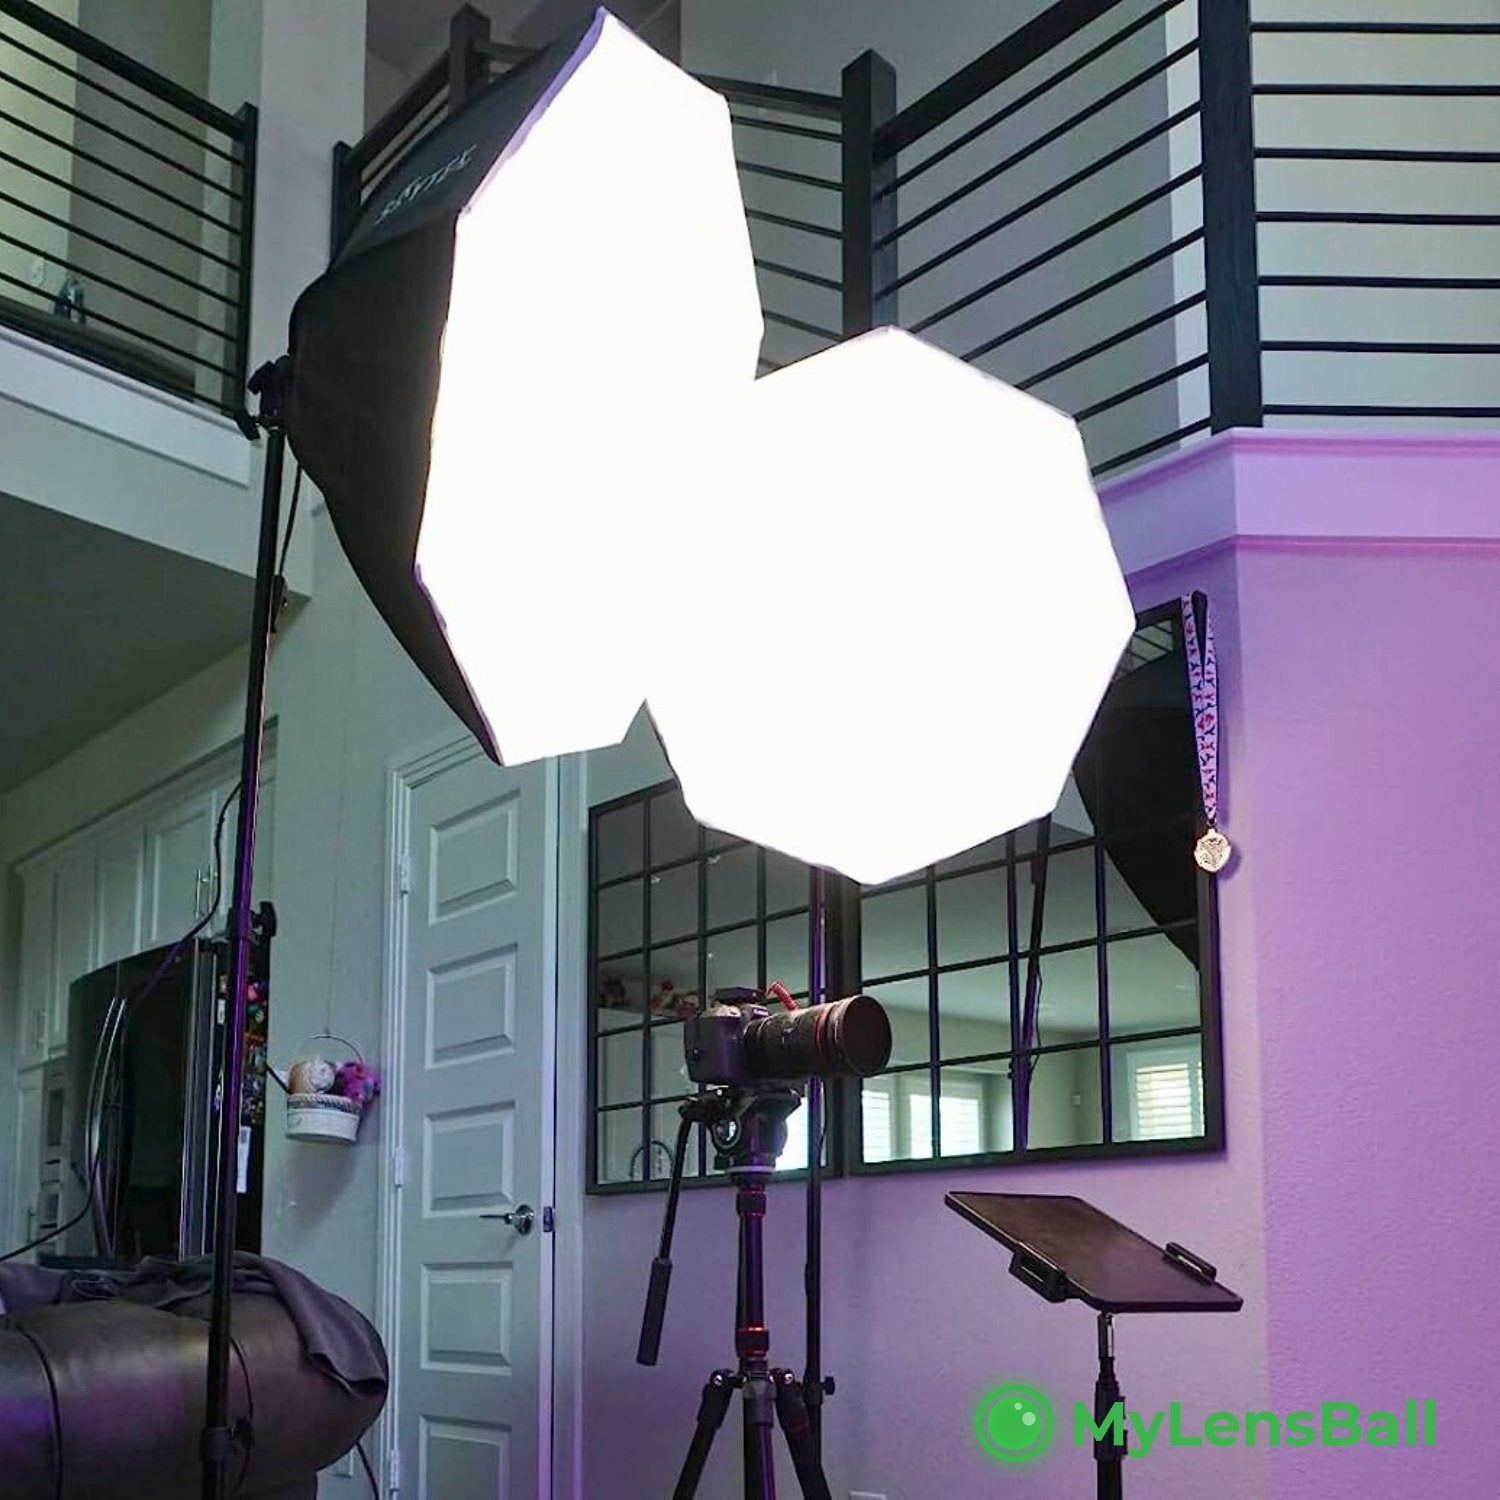 Pro Octagon LED Softbox Lighting Kit-(Dimmable LED Design) - mylensball.com.au